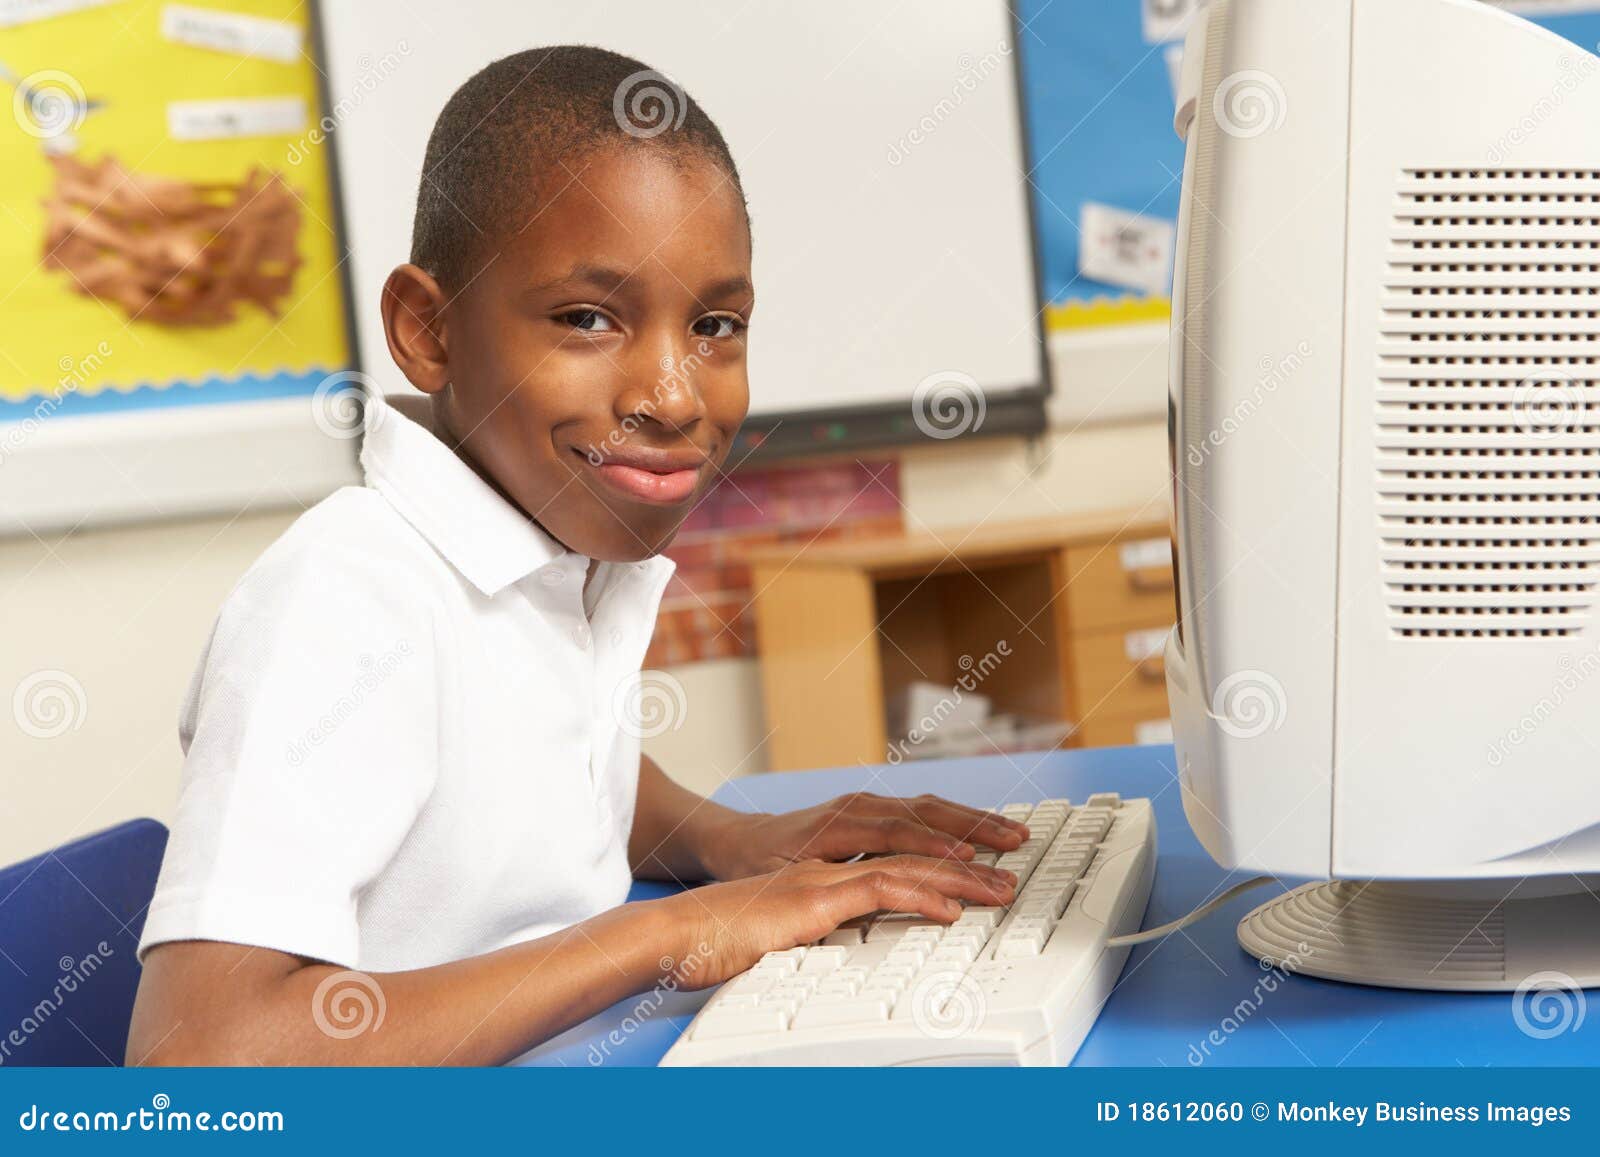 schoolboy in it class using computer